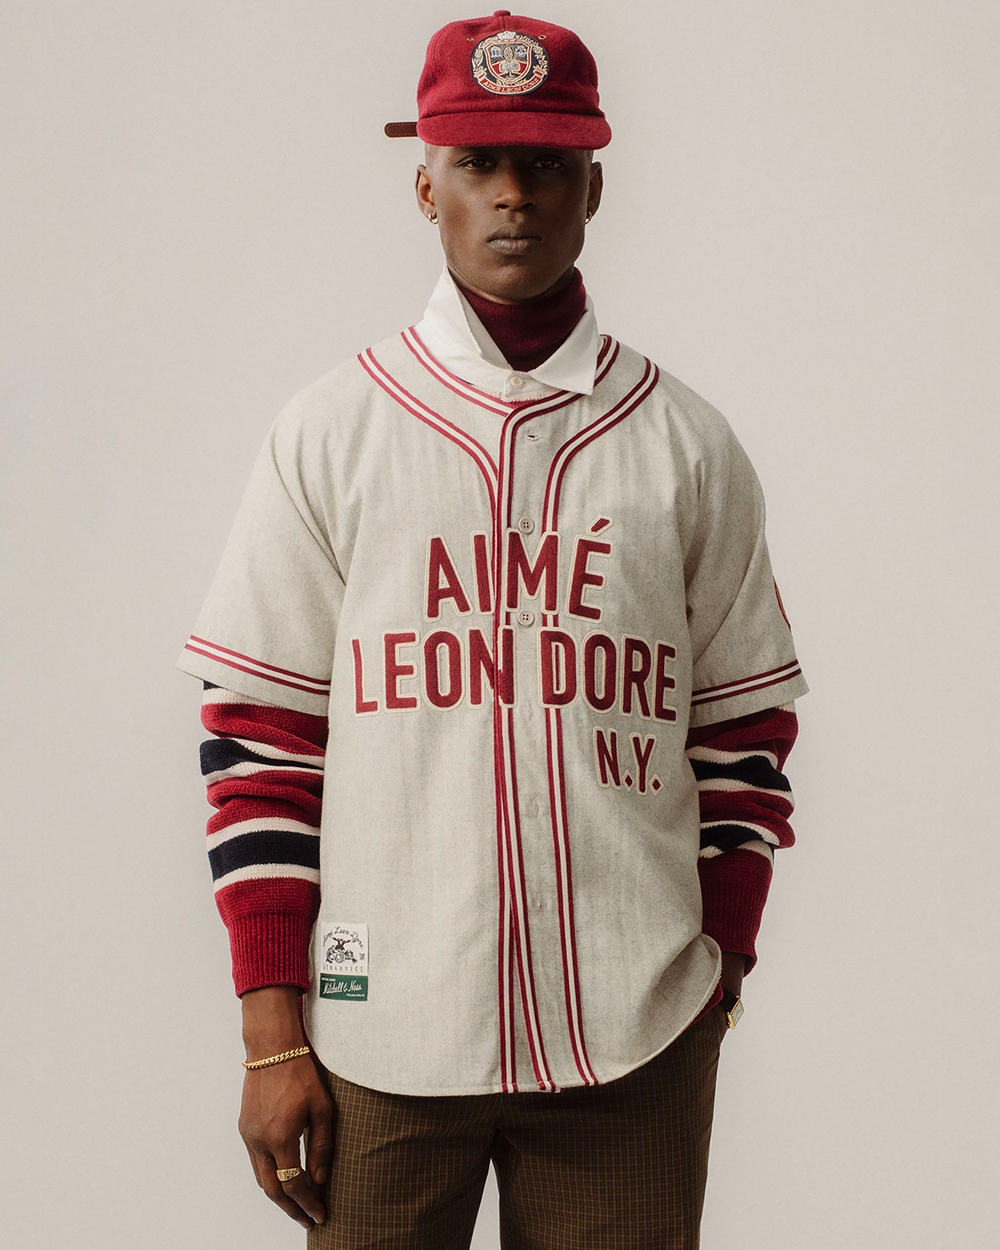 Black man wearing Aime Leon Dore brown pants, white shirt, white/red baseball top and red baseball cap